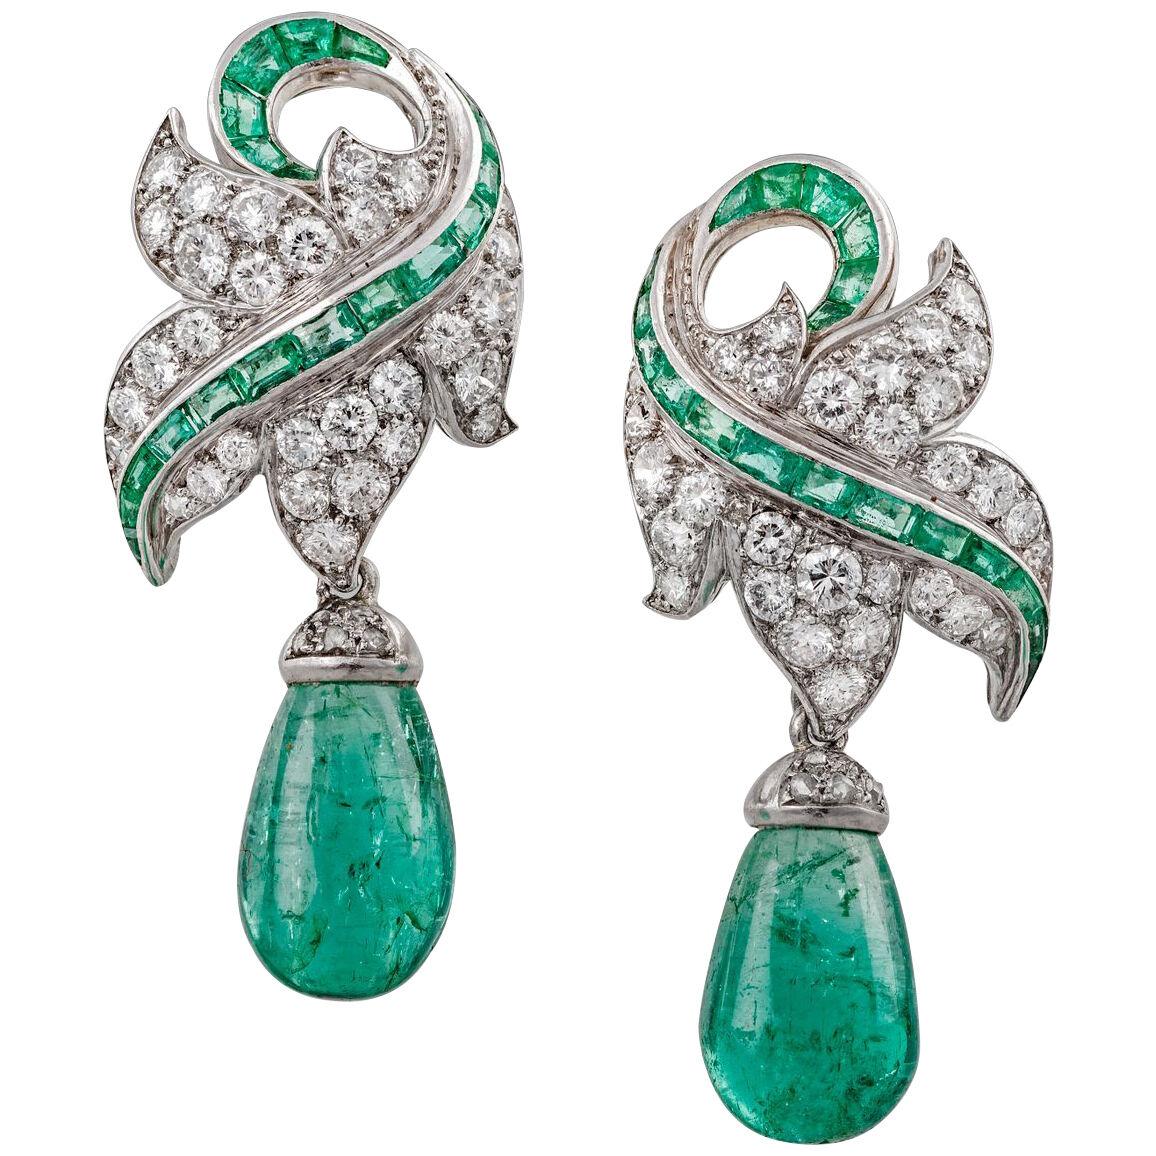 An Important Pair of Emerald & Diamond Ear Clips